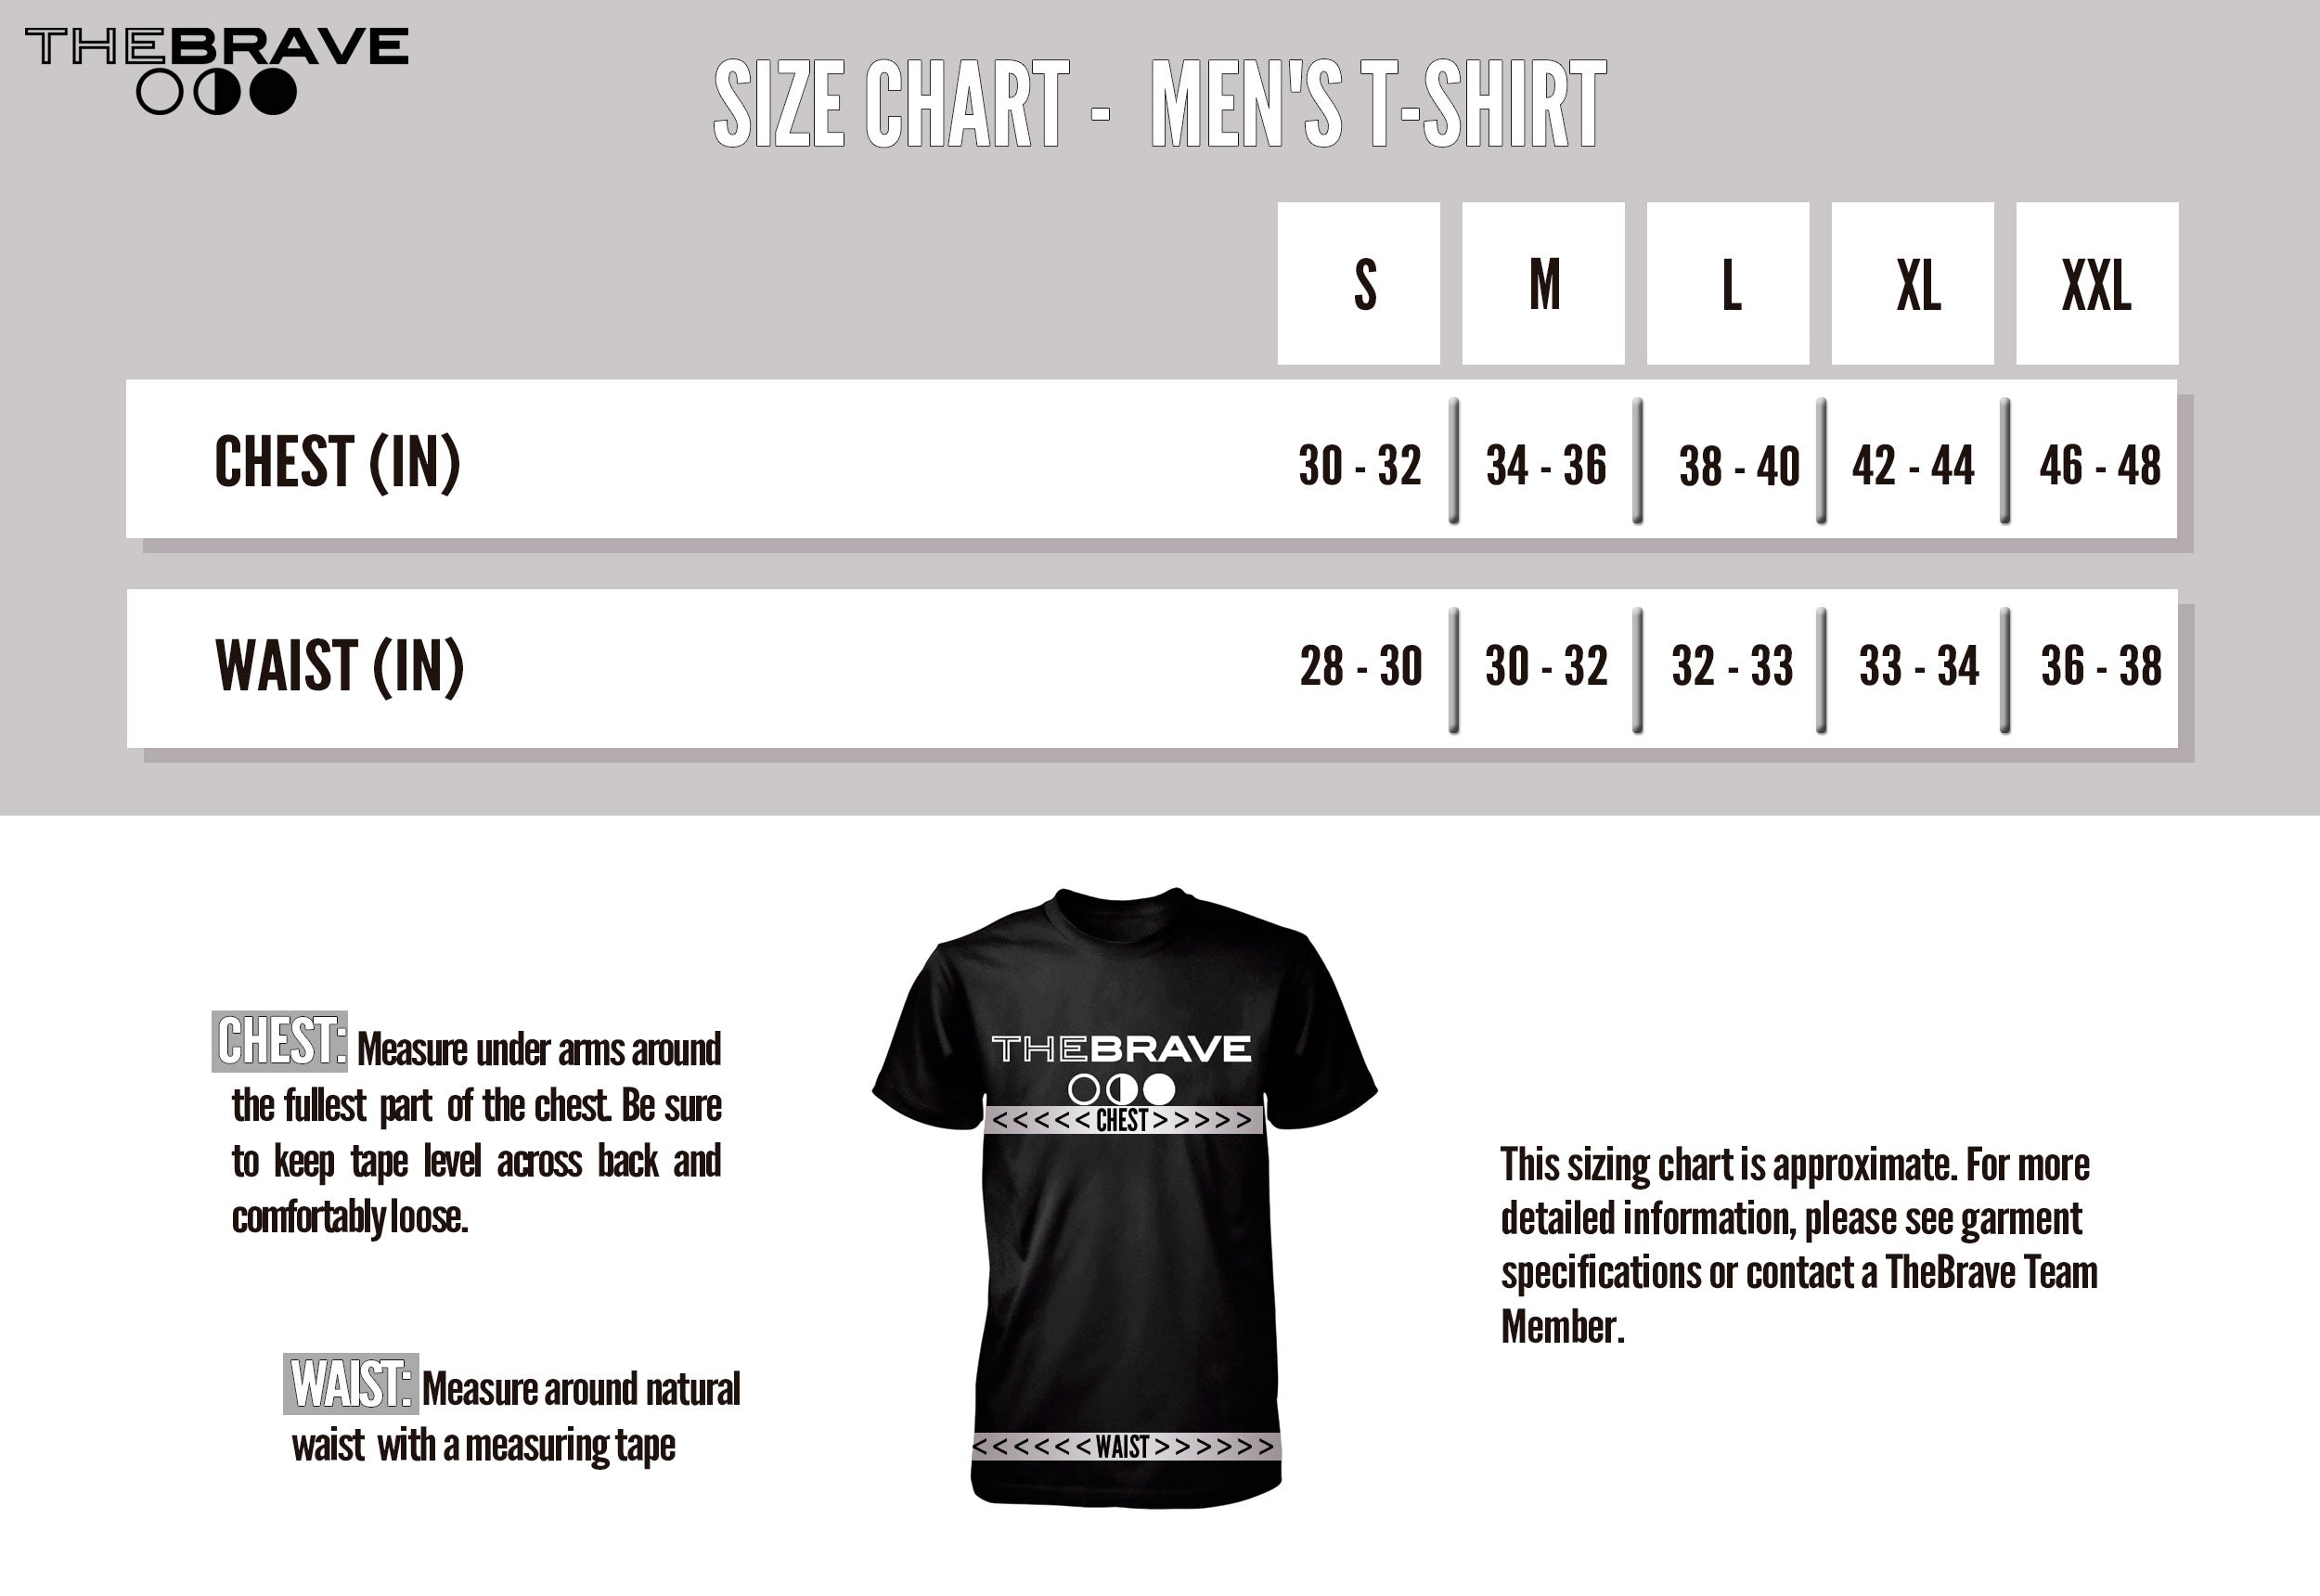 Prada Shirt Size Chart